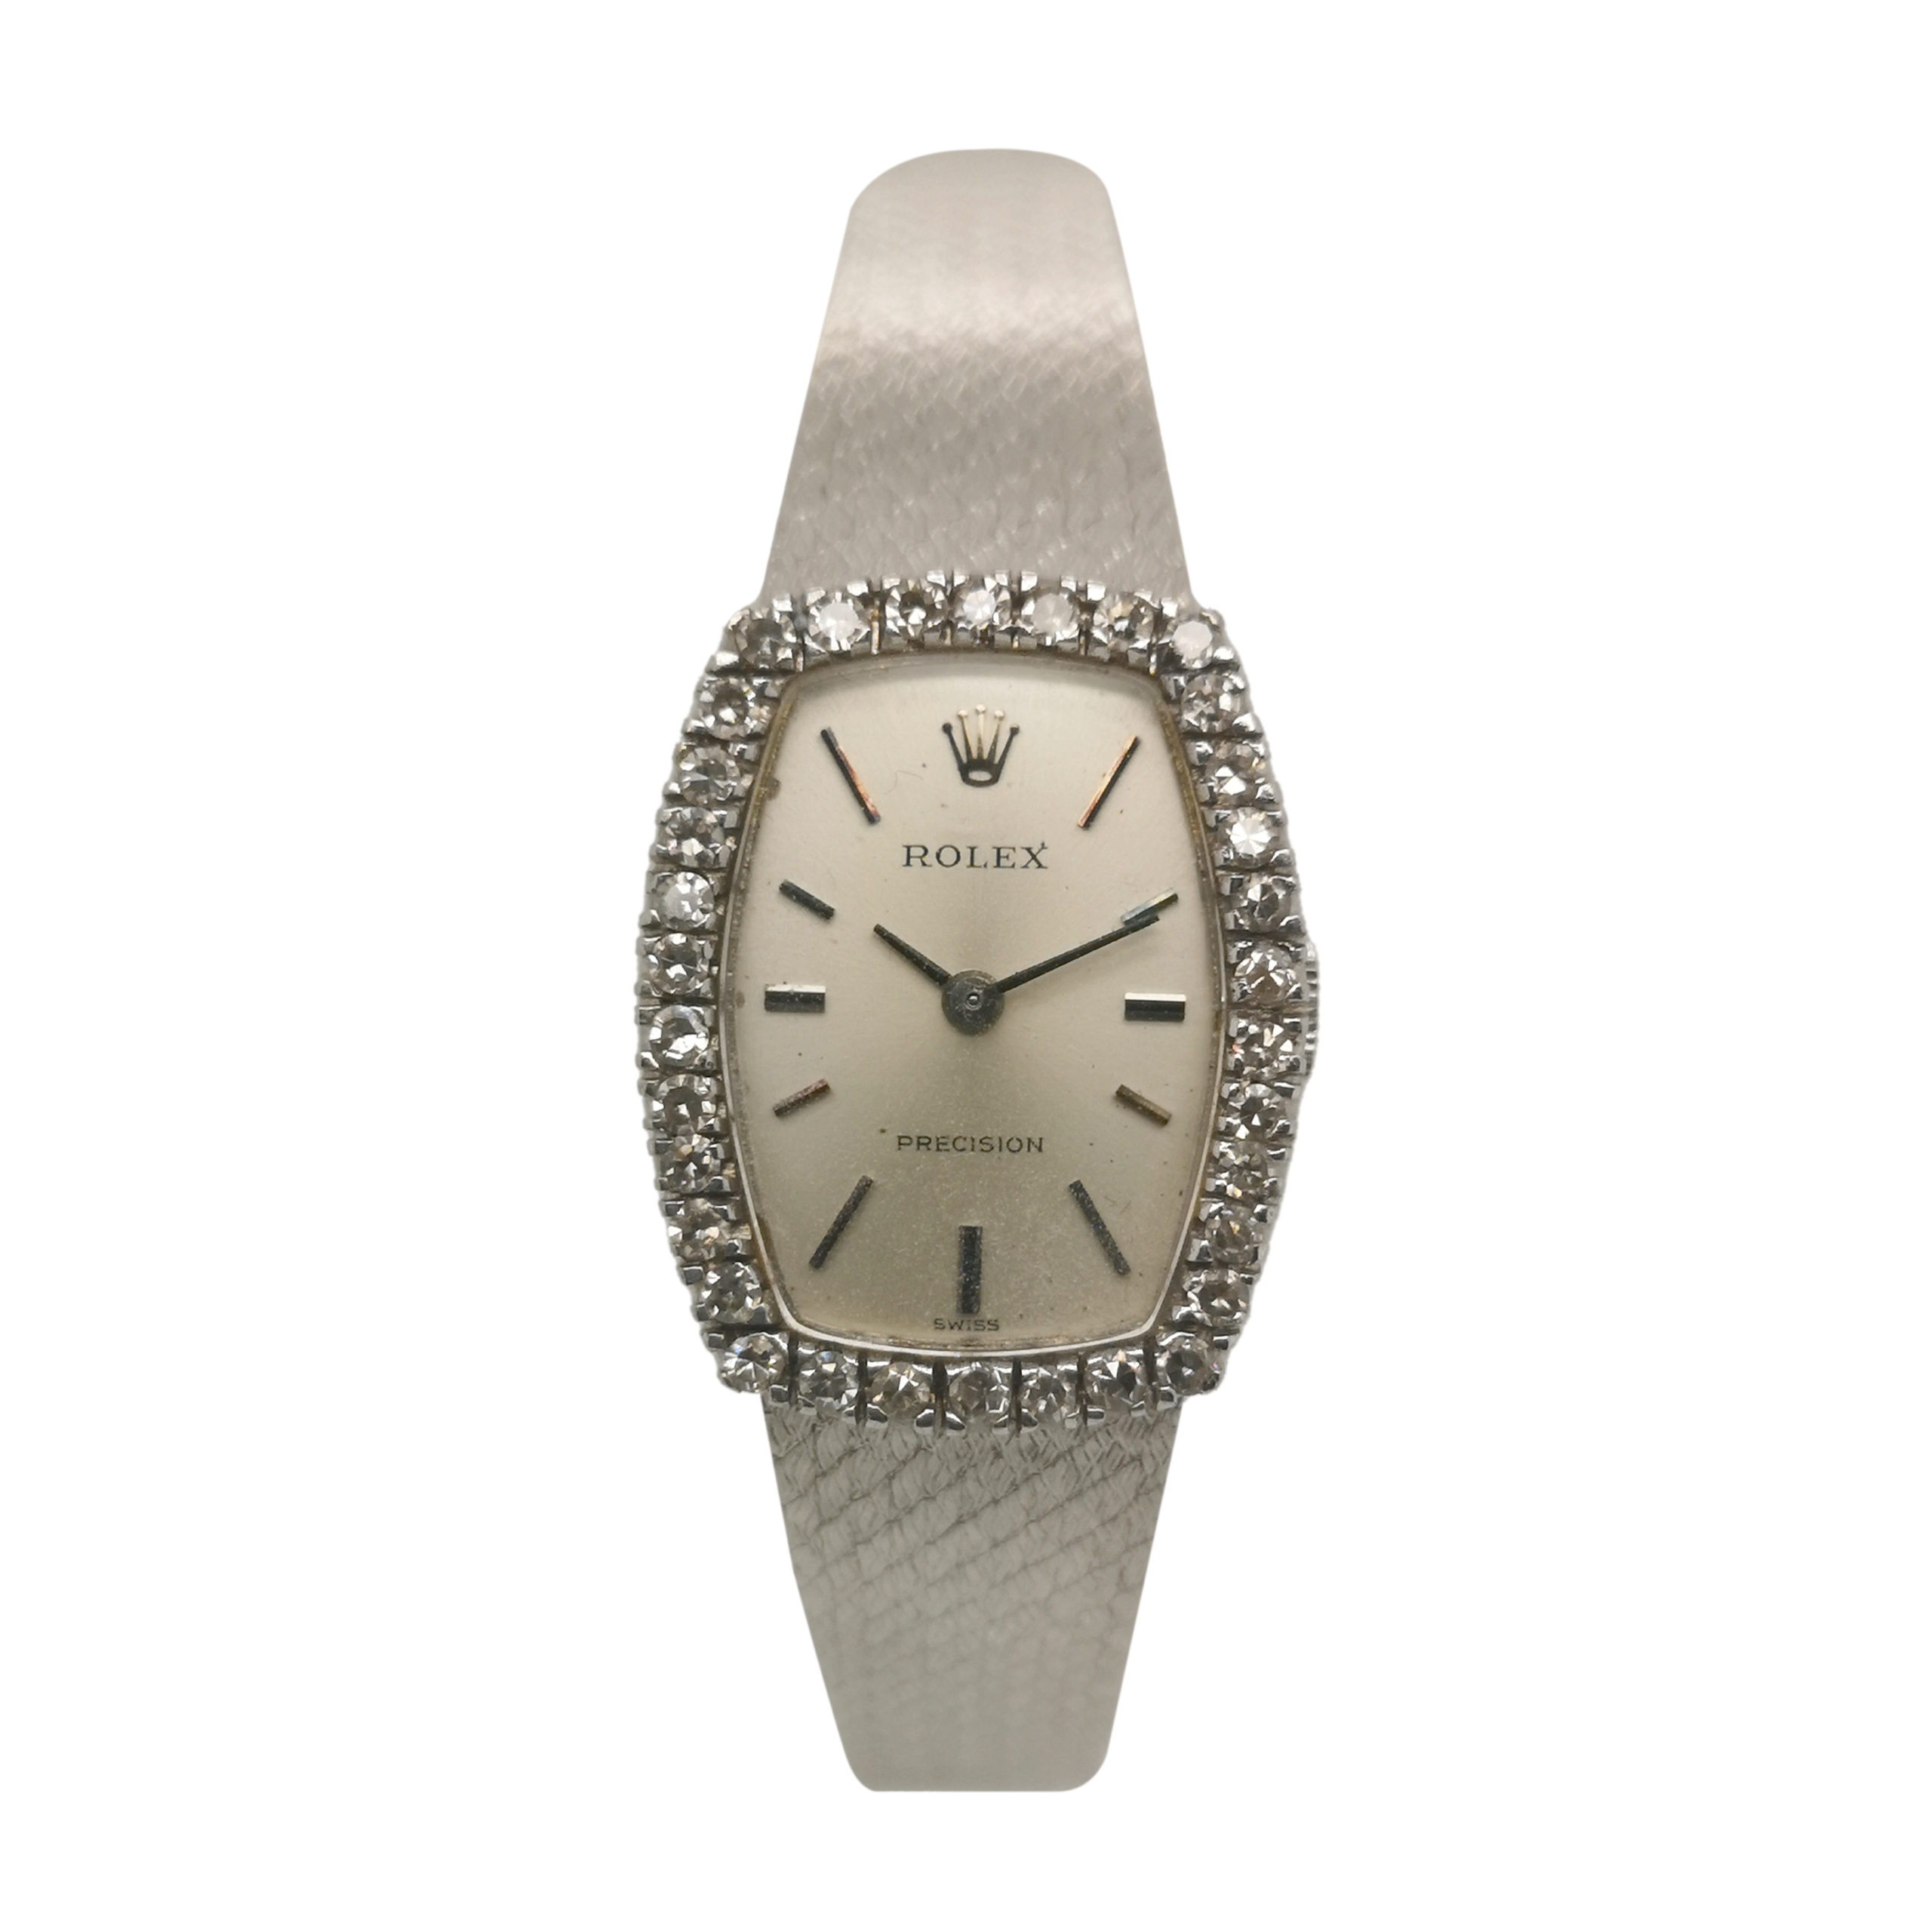 Rolex Lady Precision Watch